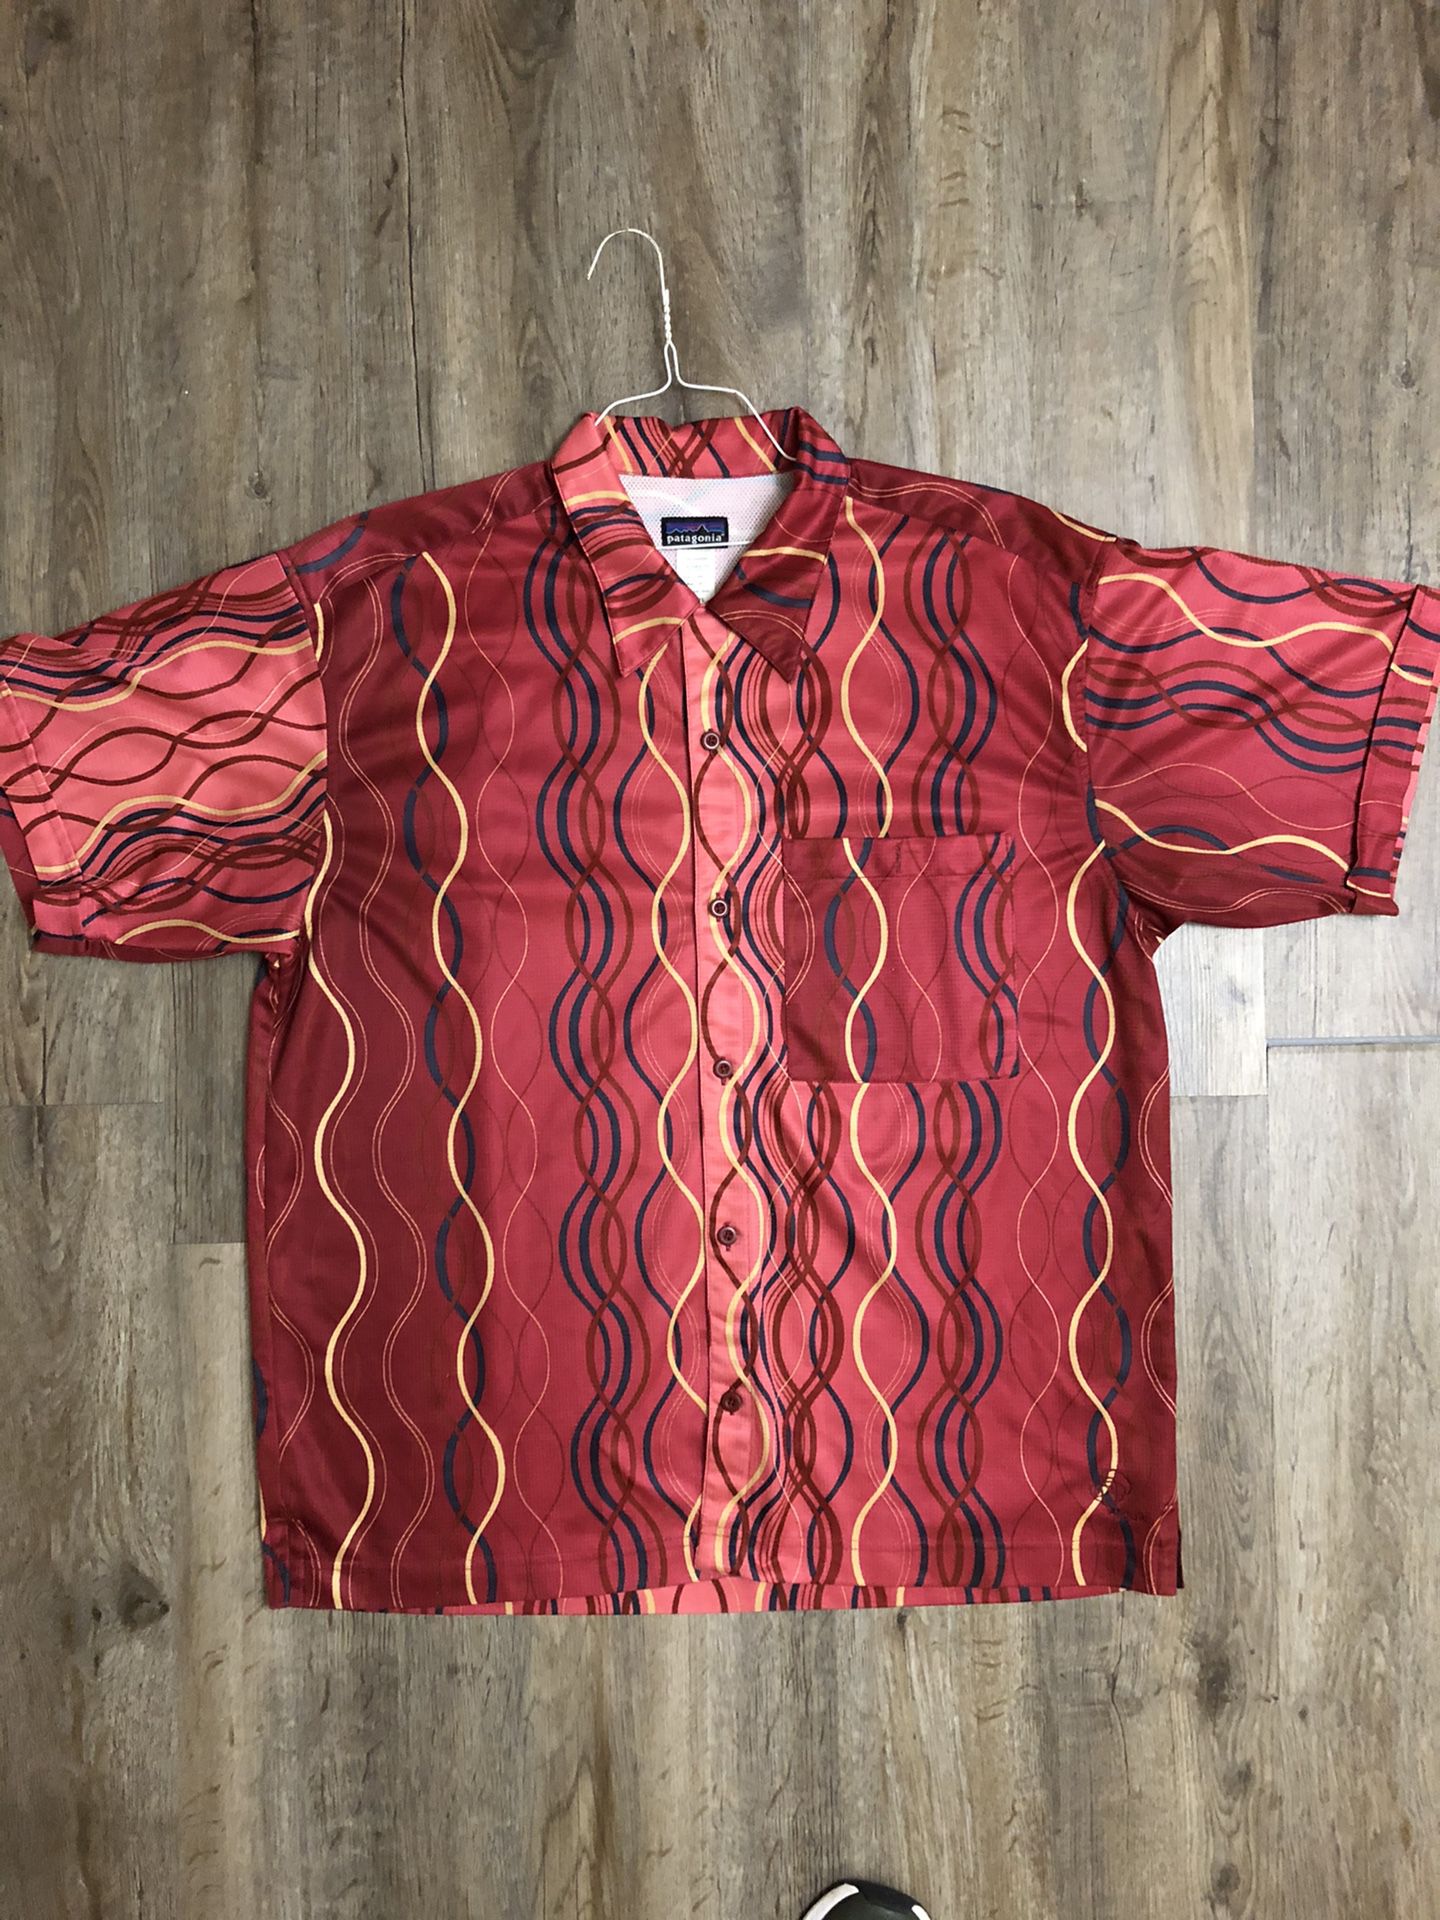 Patagonia Rhythm Short Sleeve Button up shirt - Large